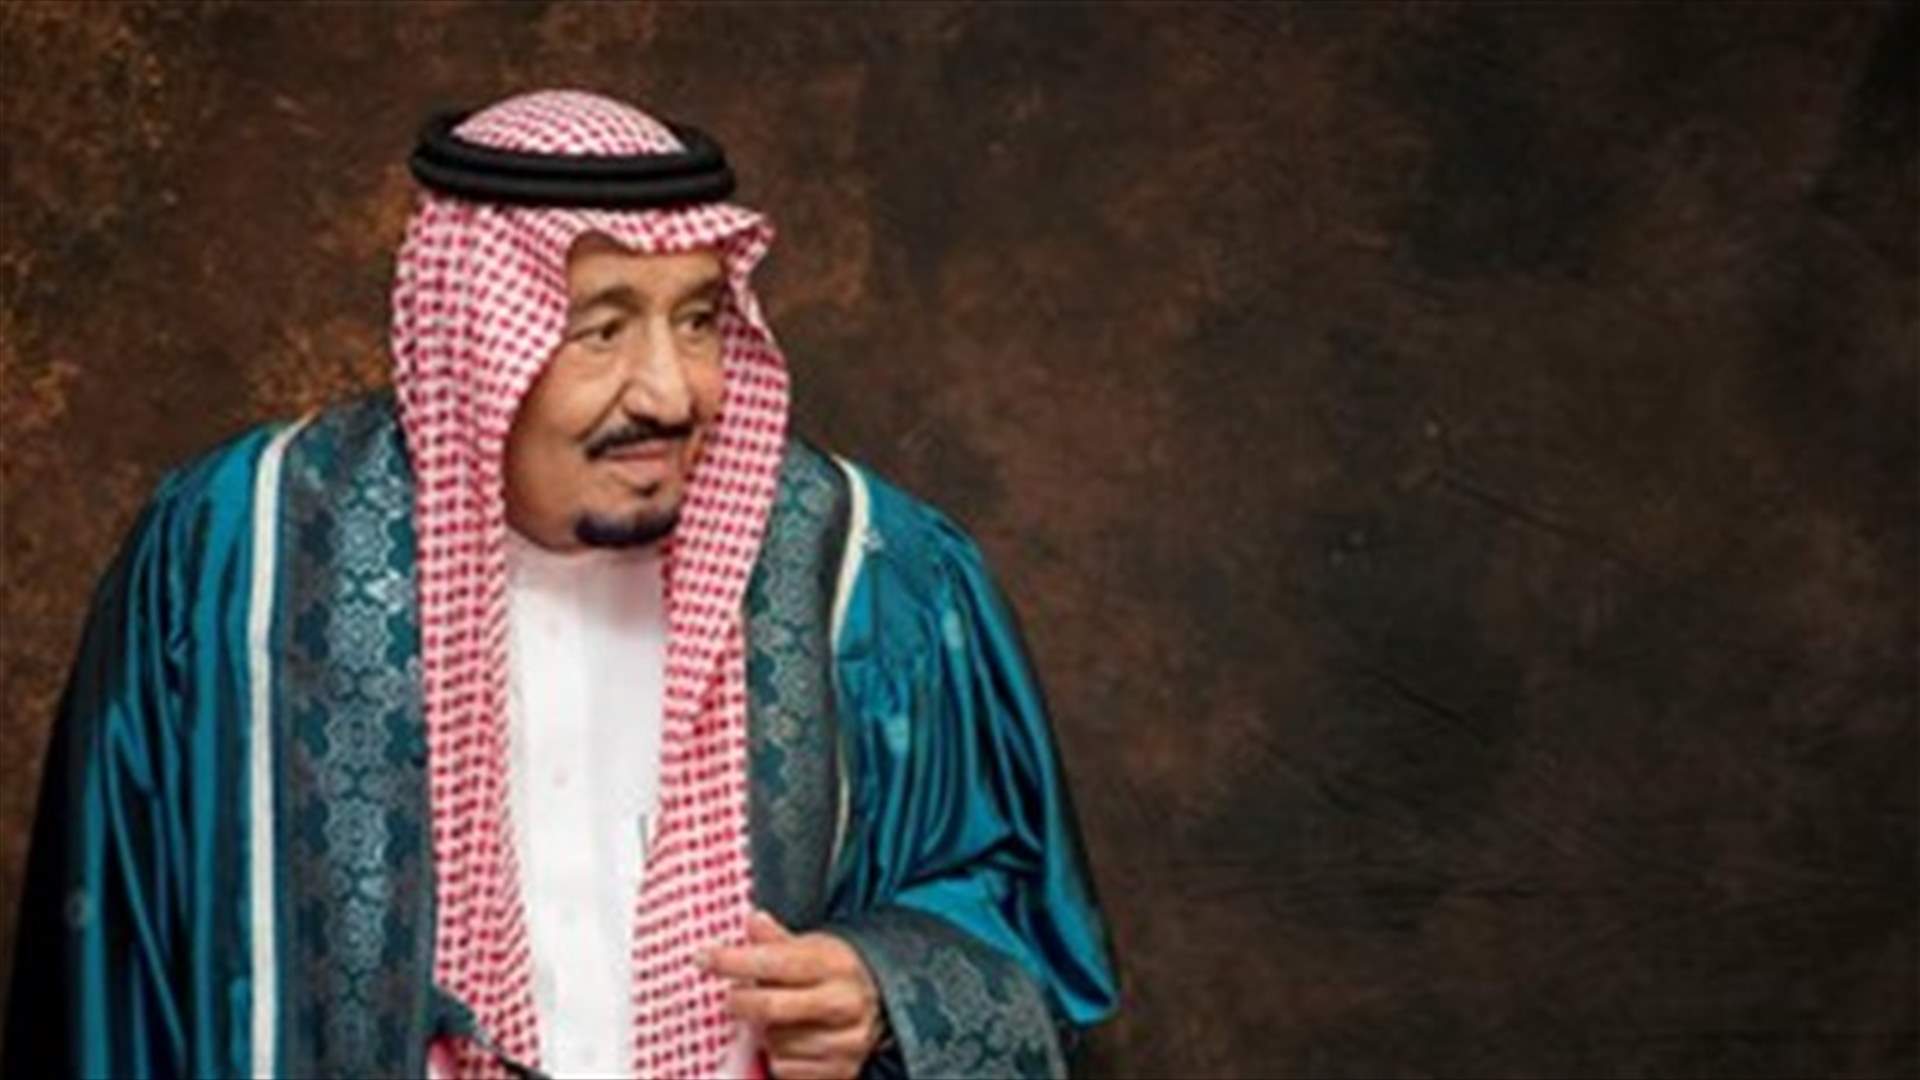 Malaysian police say foiled attack on Arab royalty ahead of Saudi king visit